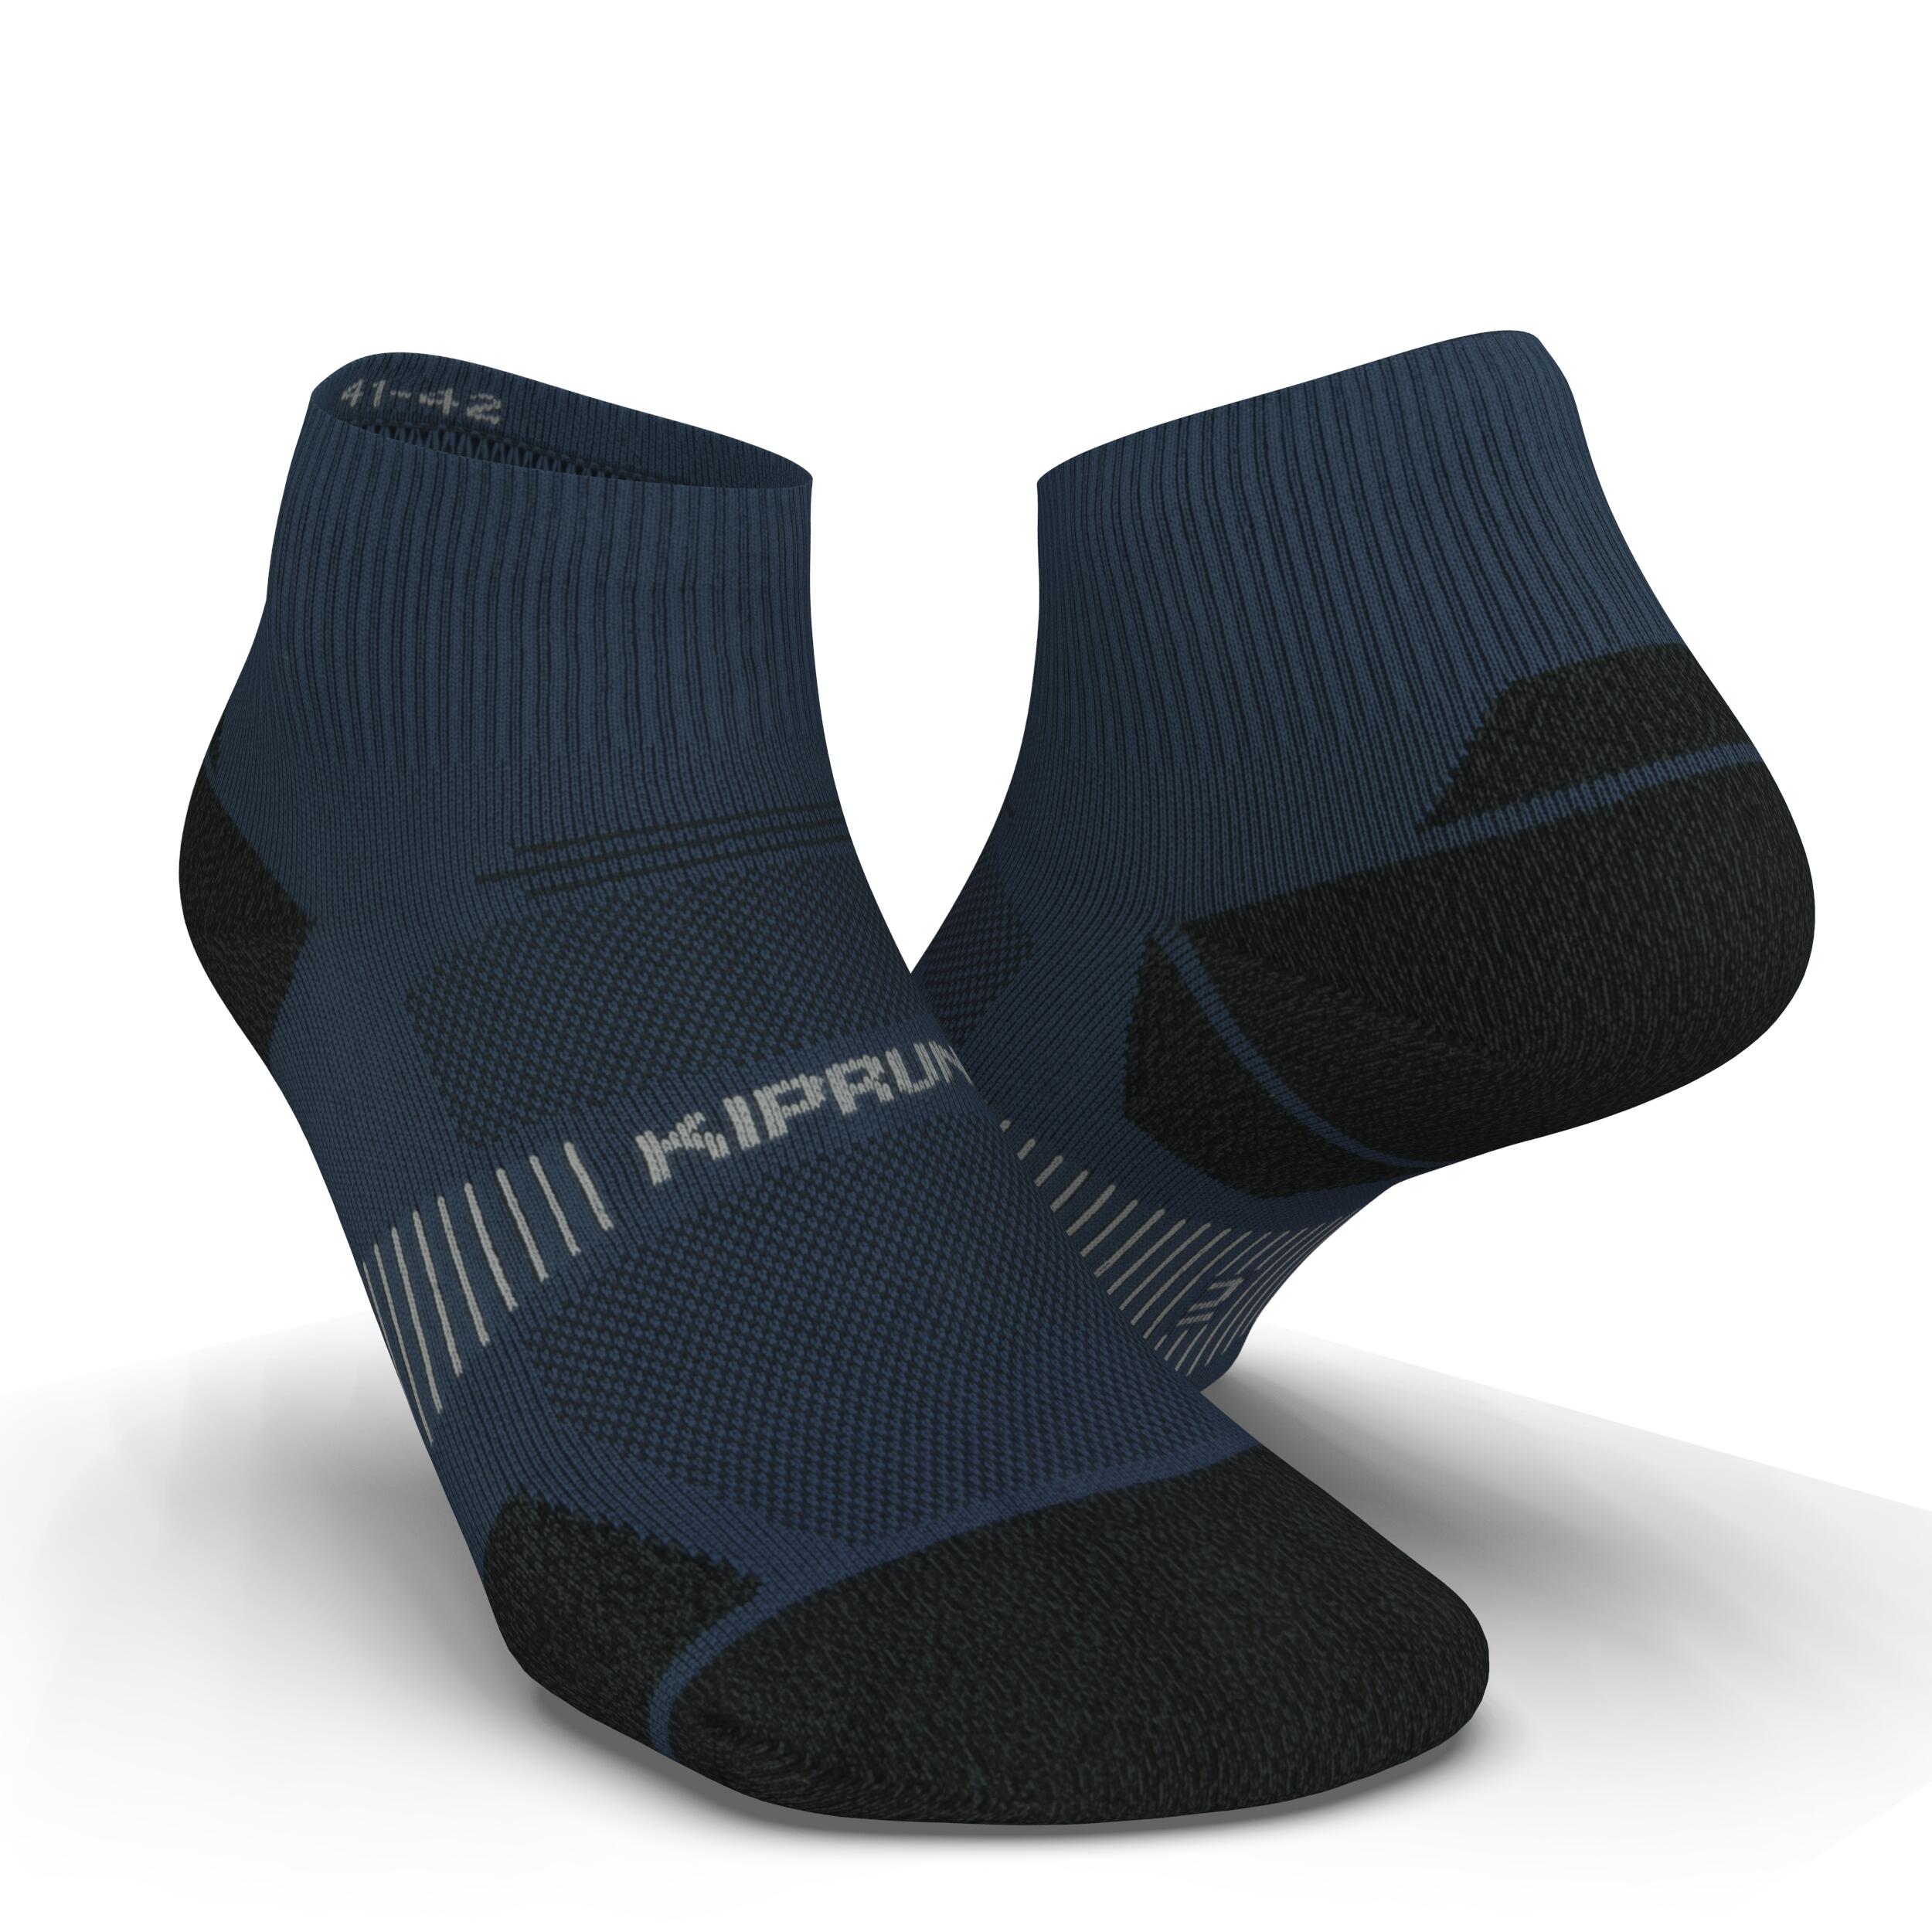 NYAMBA (Decathlon) Pilates Non-Slip Fitness Socks